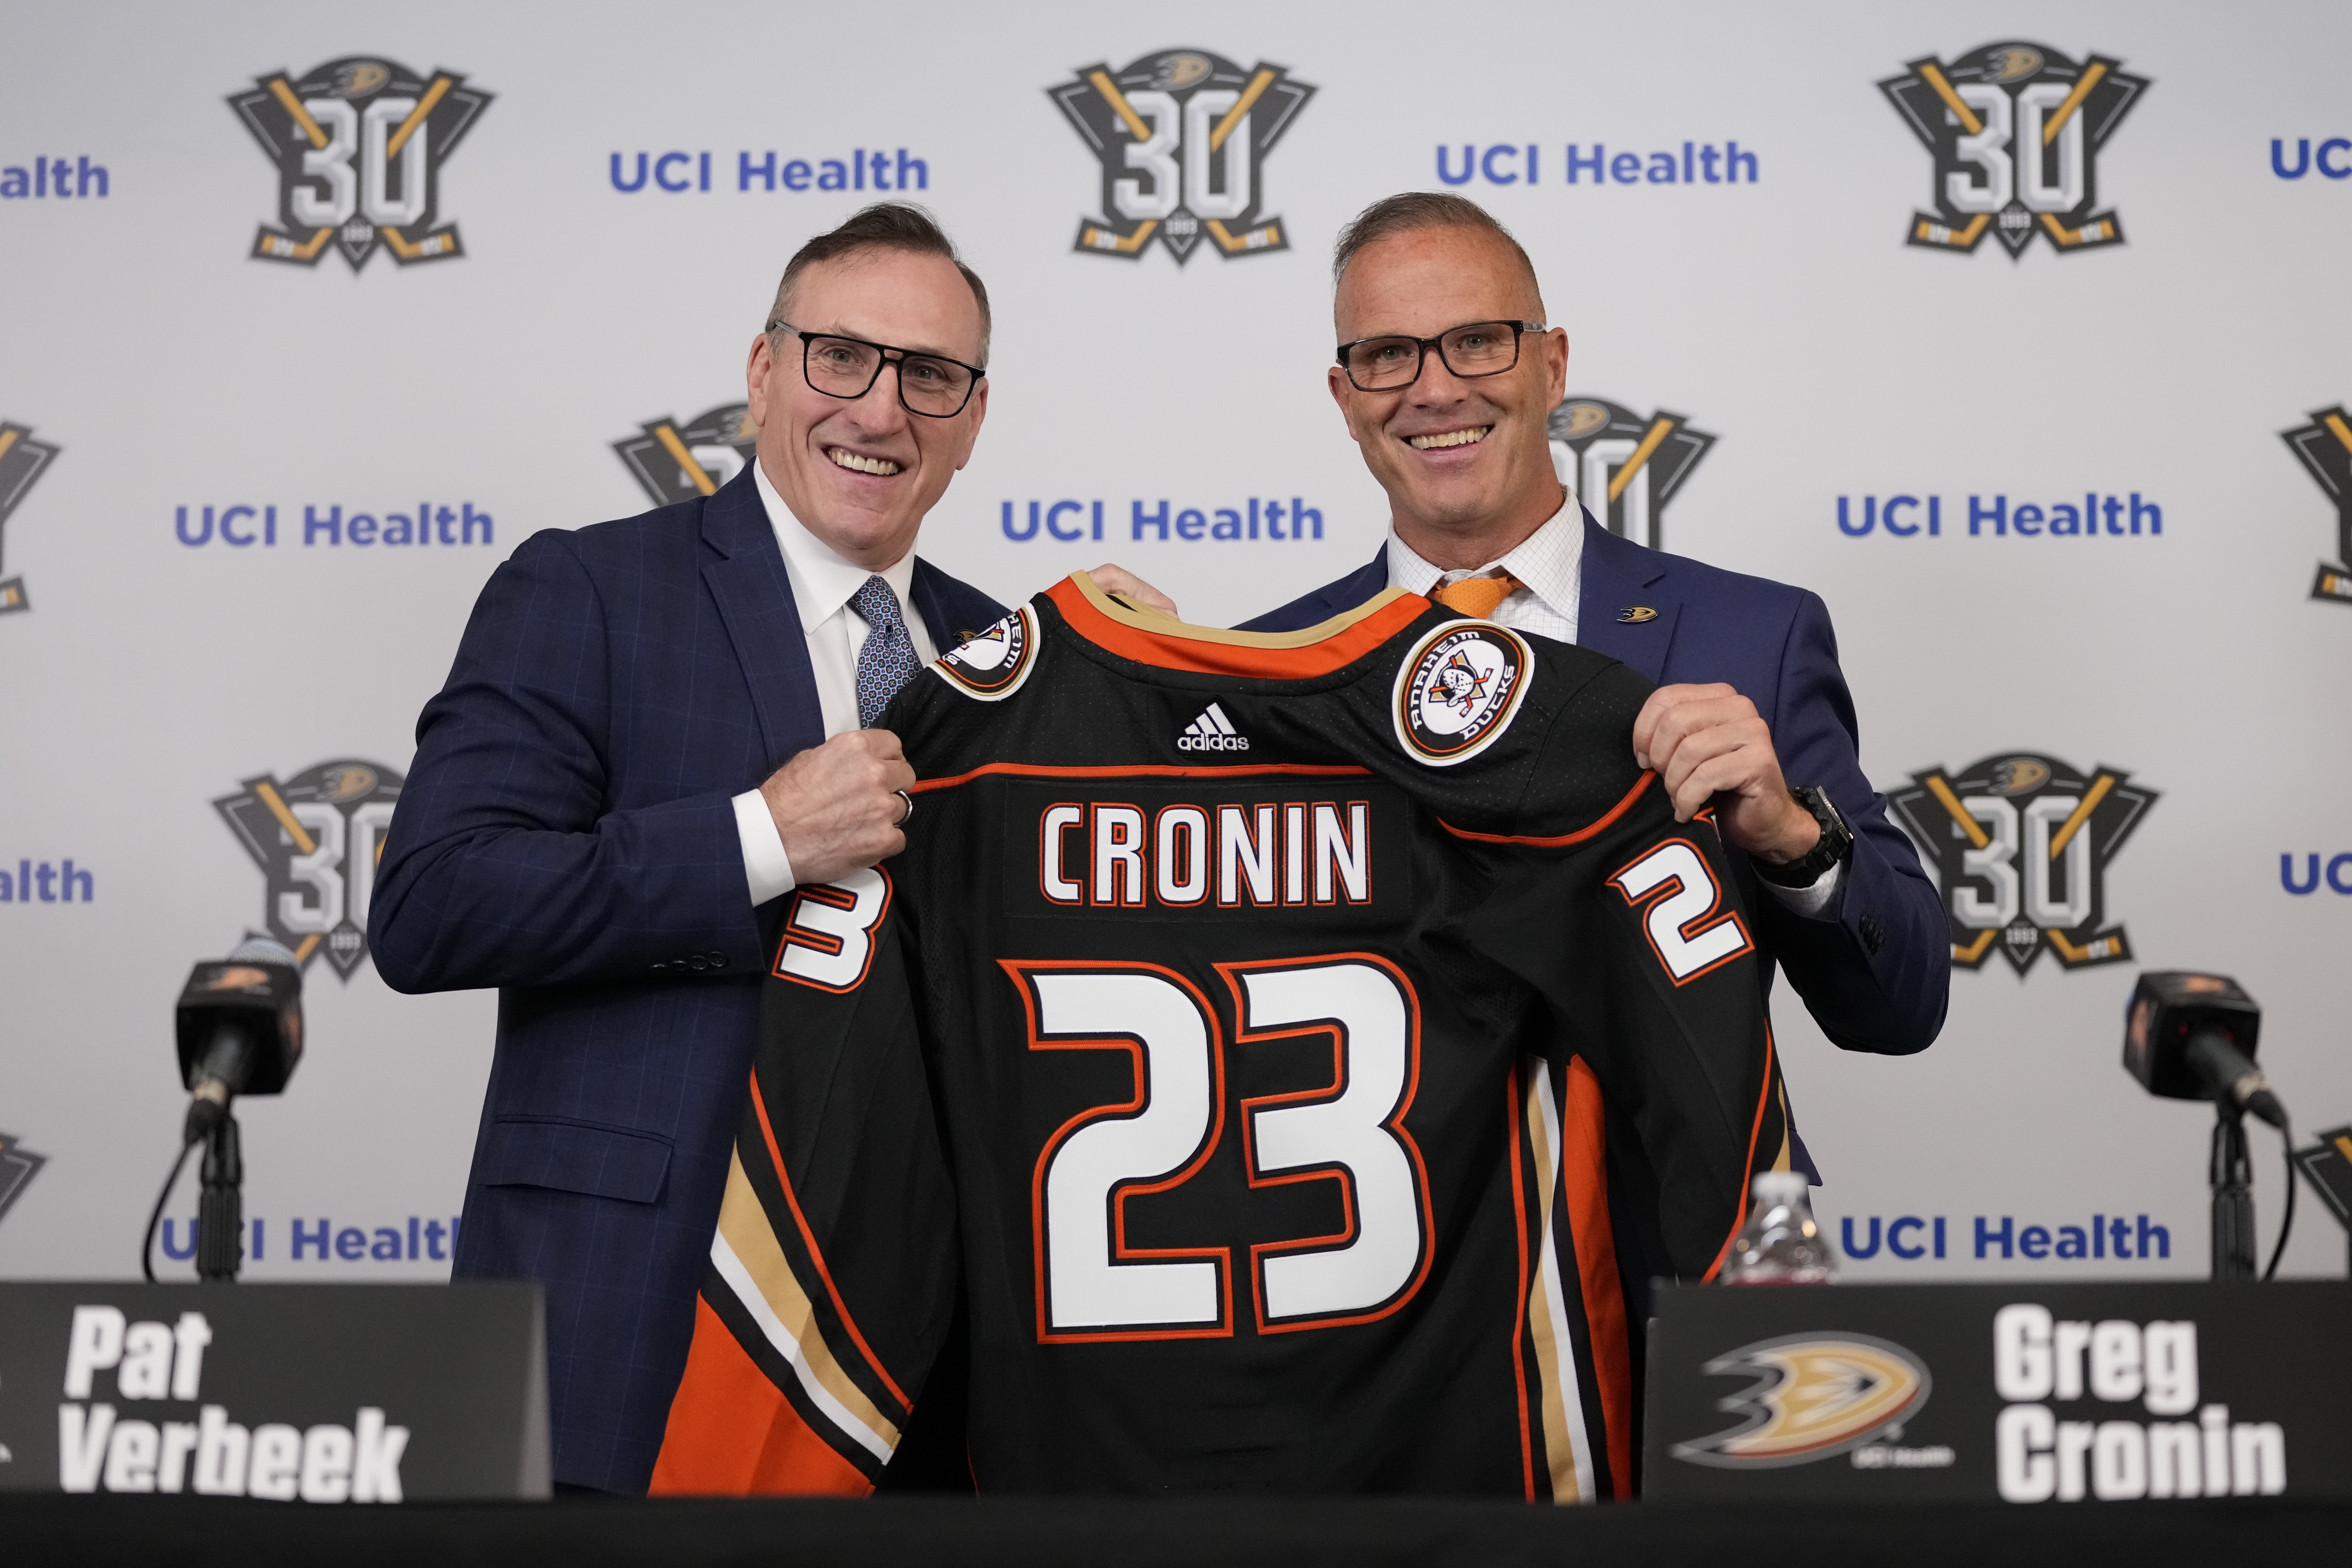 New Ducks coach Greg Cronin grew up idolizing the Bruins